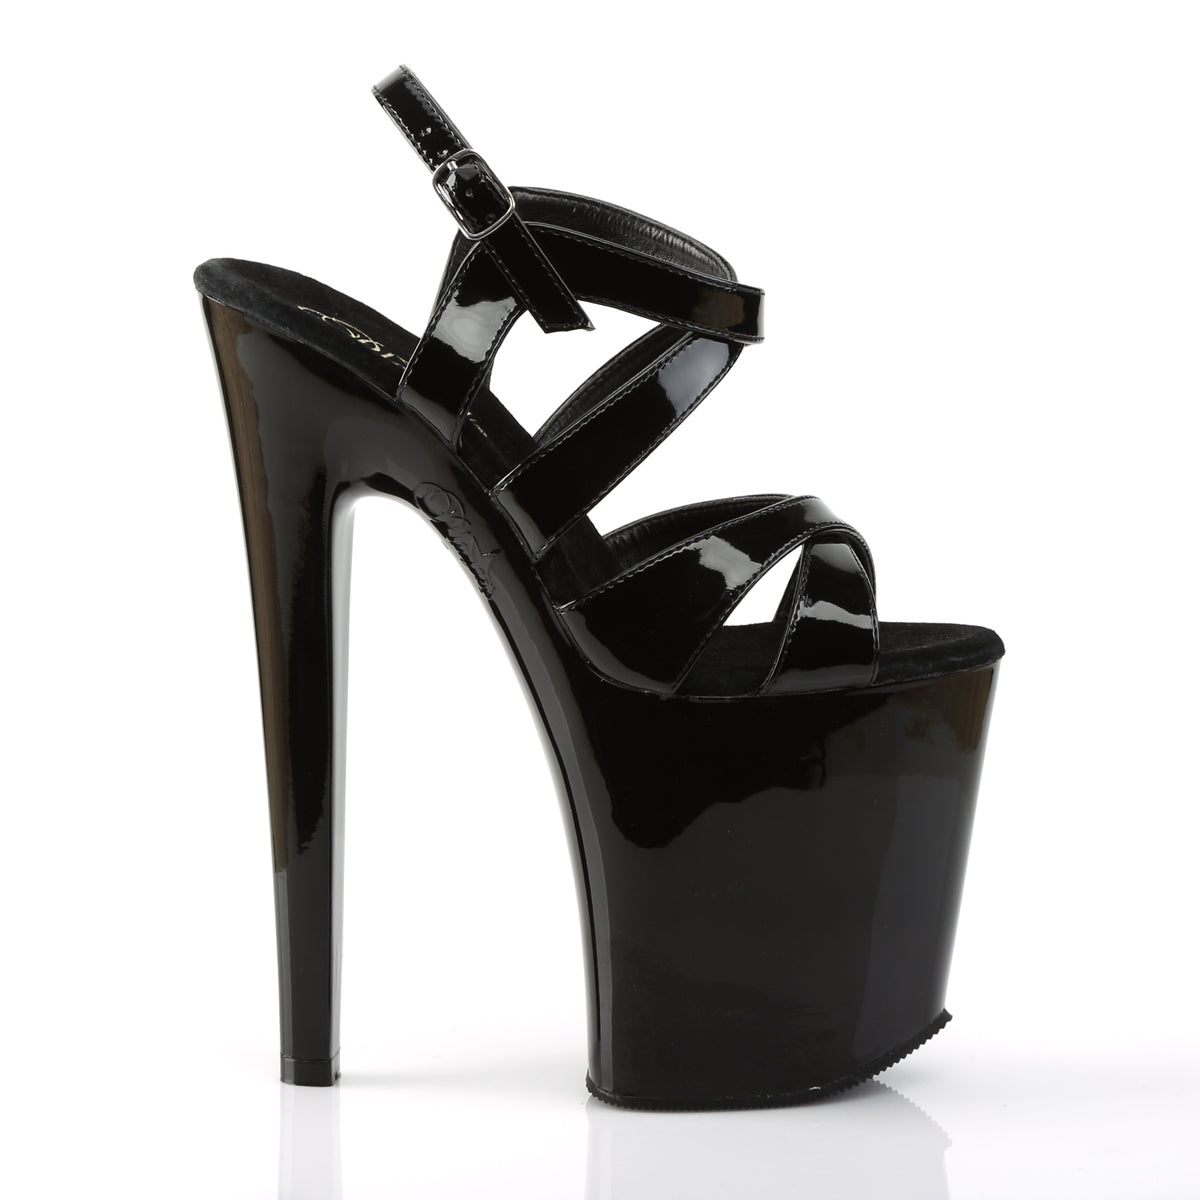 XTREME-872 8" Heel Black Patent Pole Dancing Platforms Shoes-Pleaser- Sexy Shoes Fetish Heels